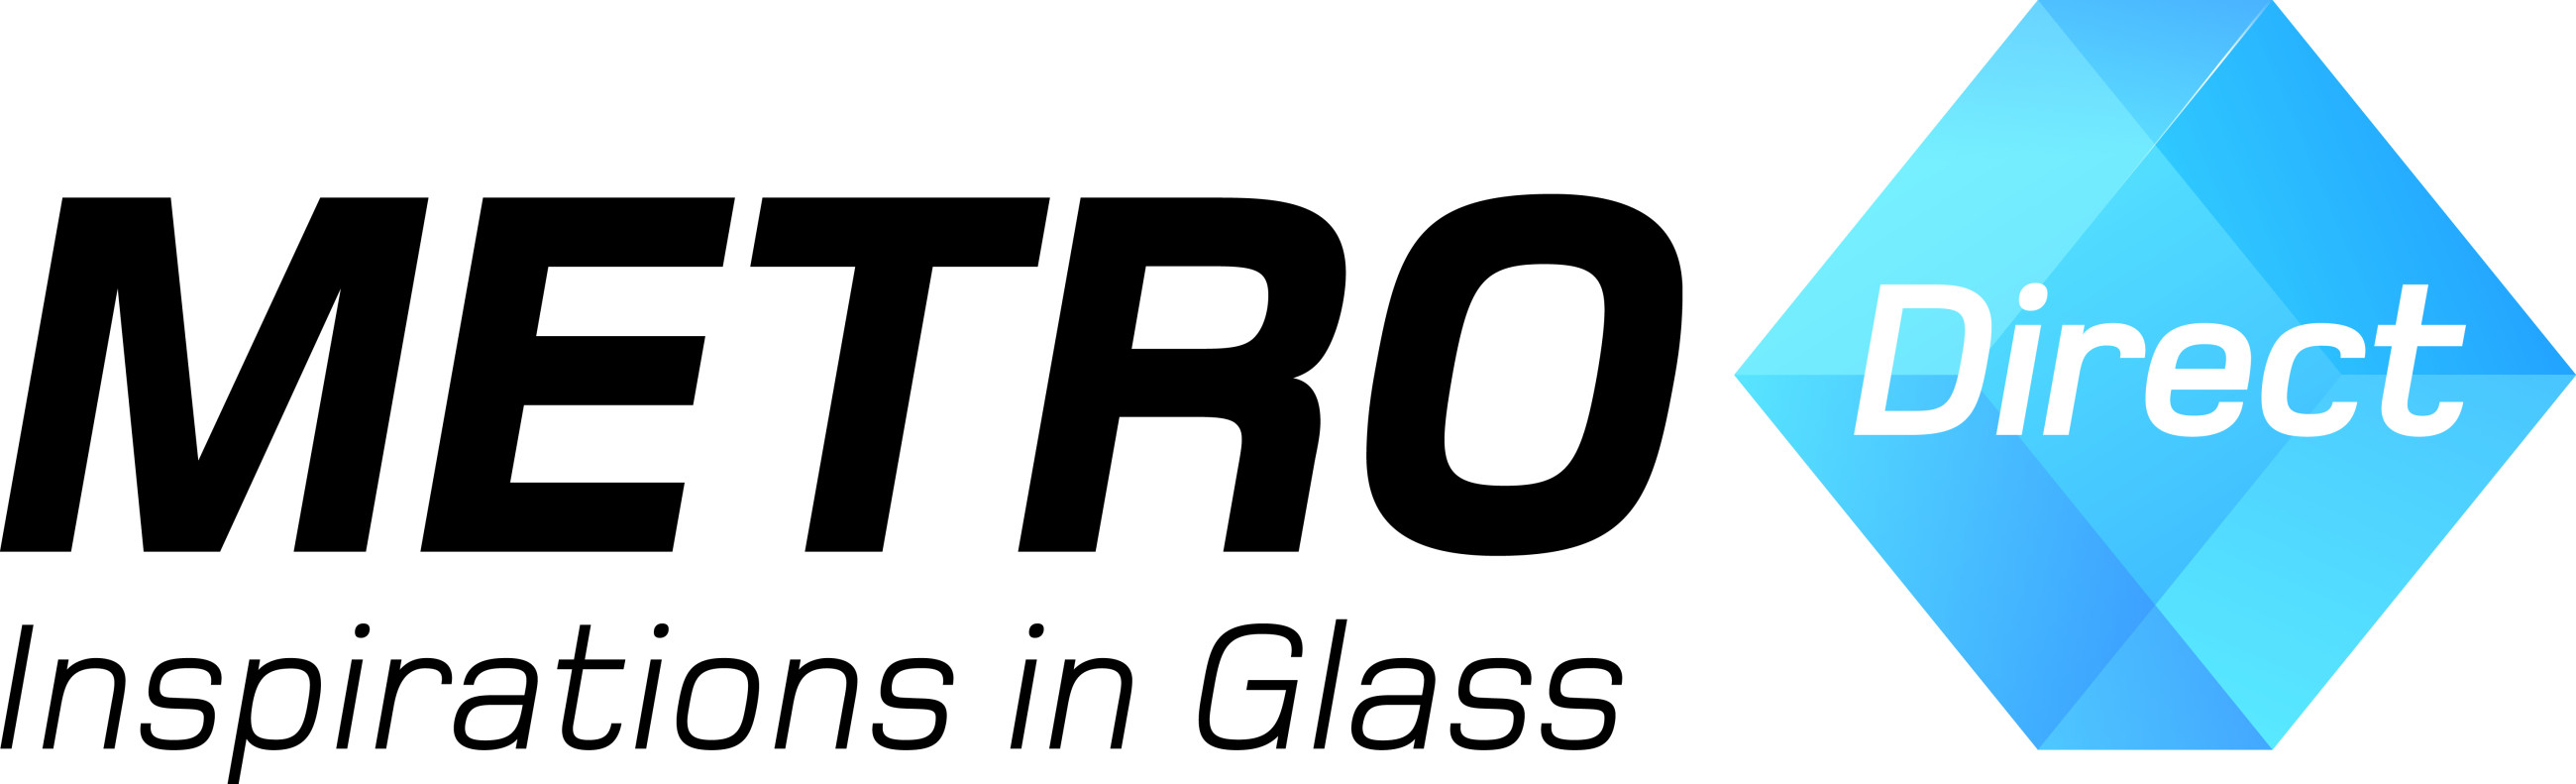 Metro glass direct logo